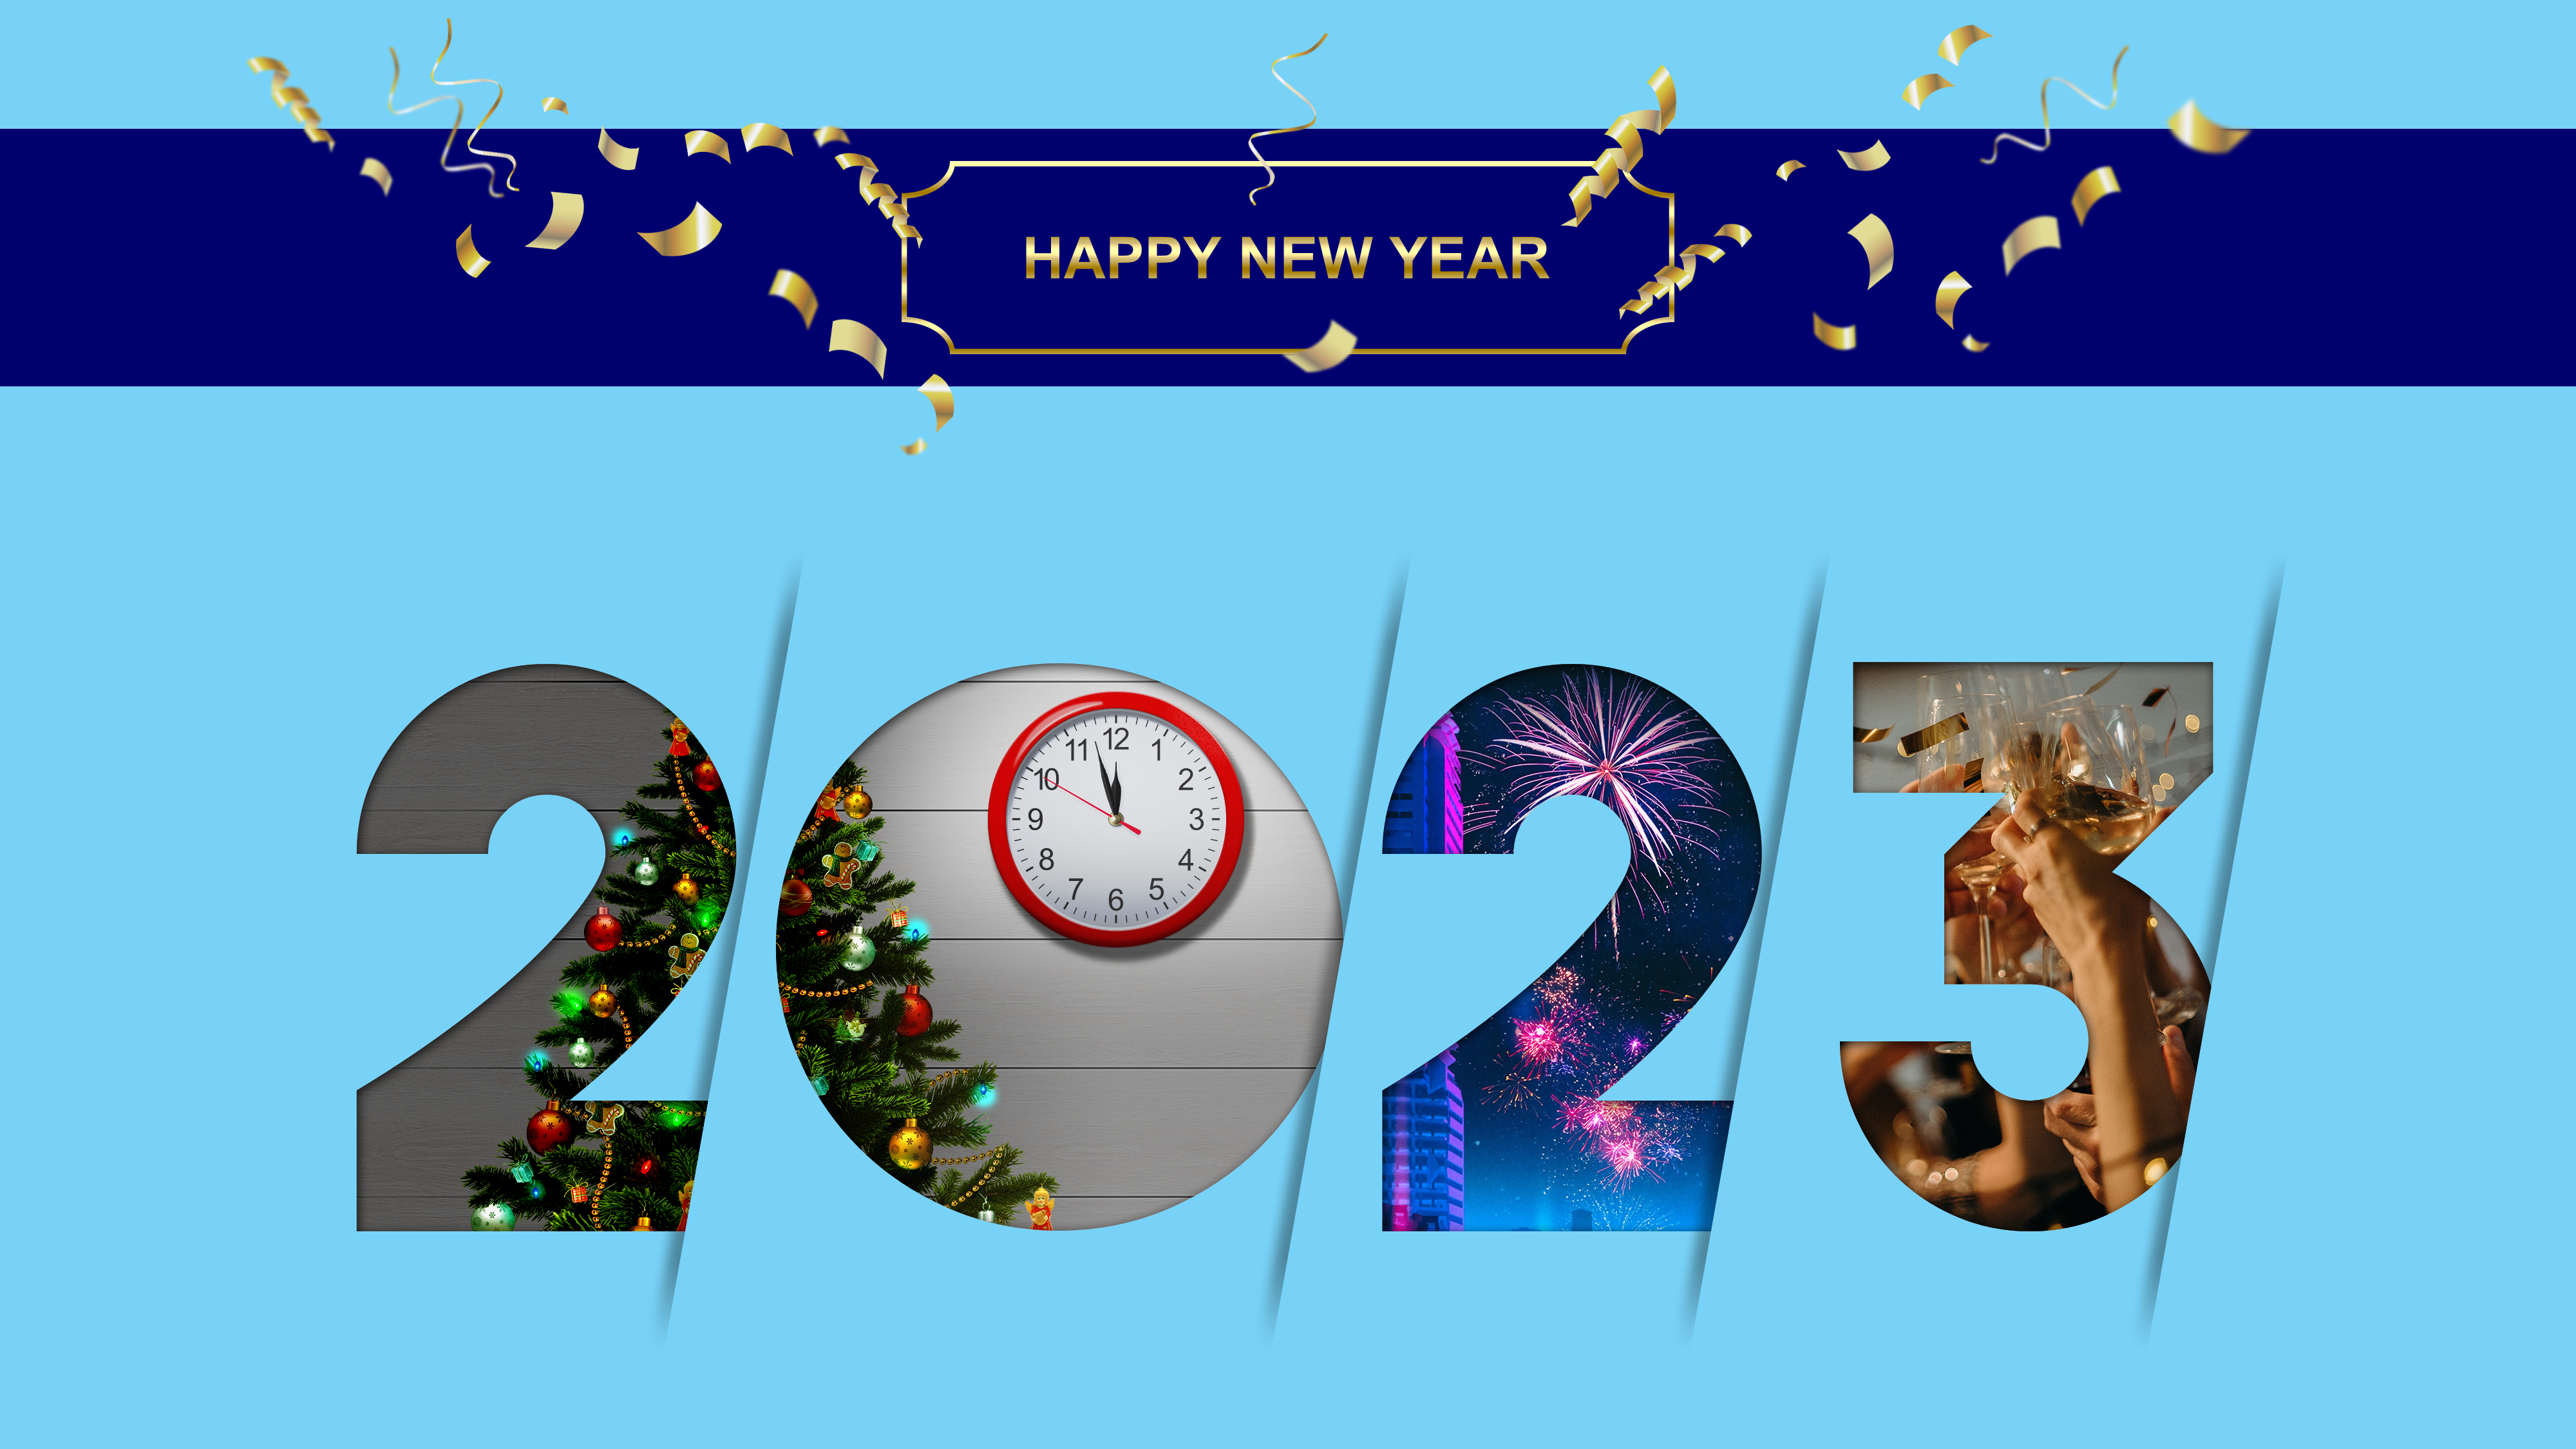 New Year 2023 4k Ultra HD Wallpaper